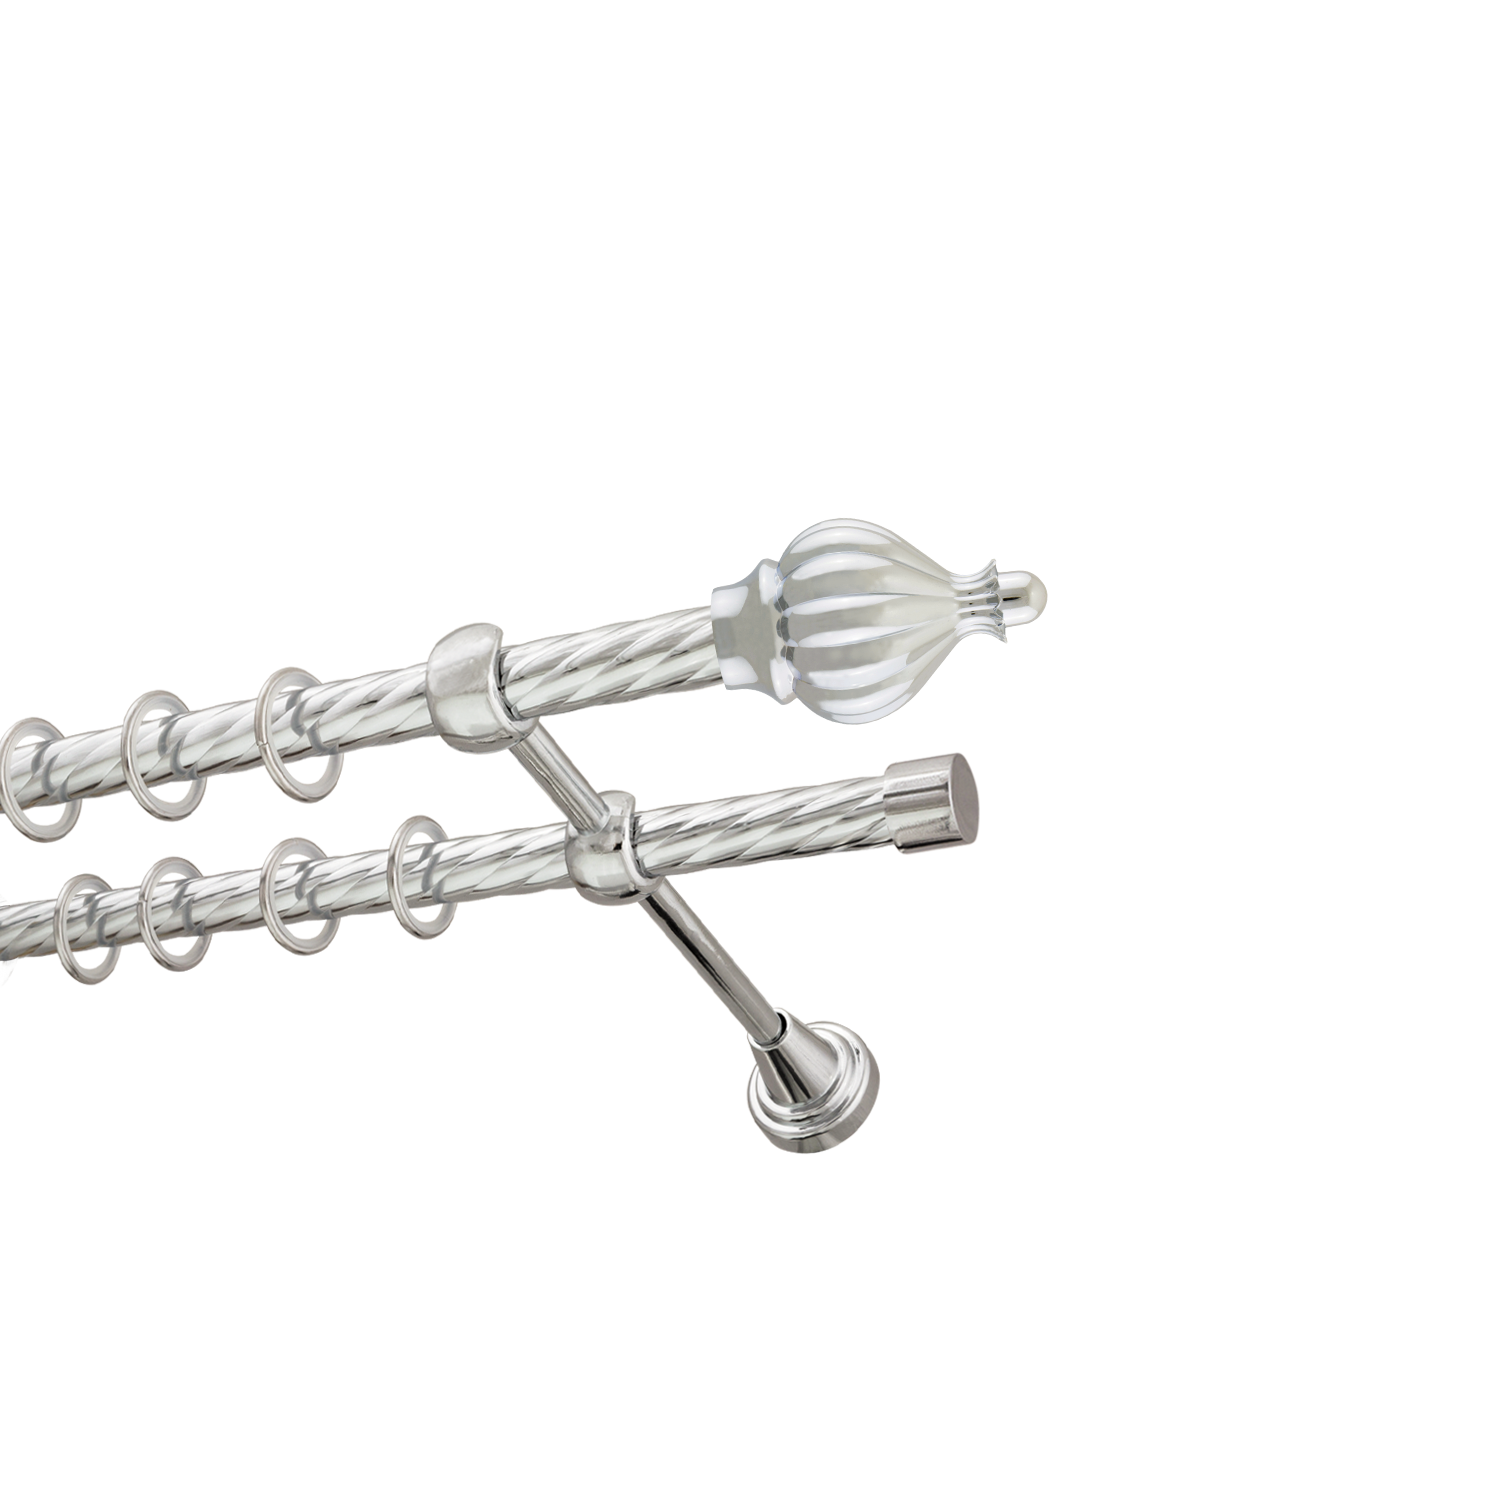 Металлический карниз для штор Афродита, двухрядный 16/16 мм, серебро, витая штанга, длина 300 см - фото Wikidecor.ru